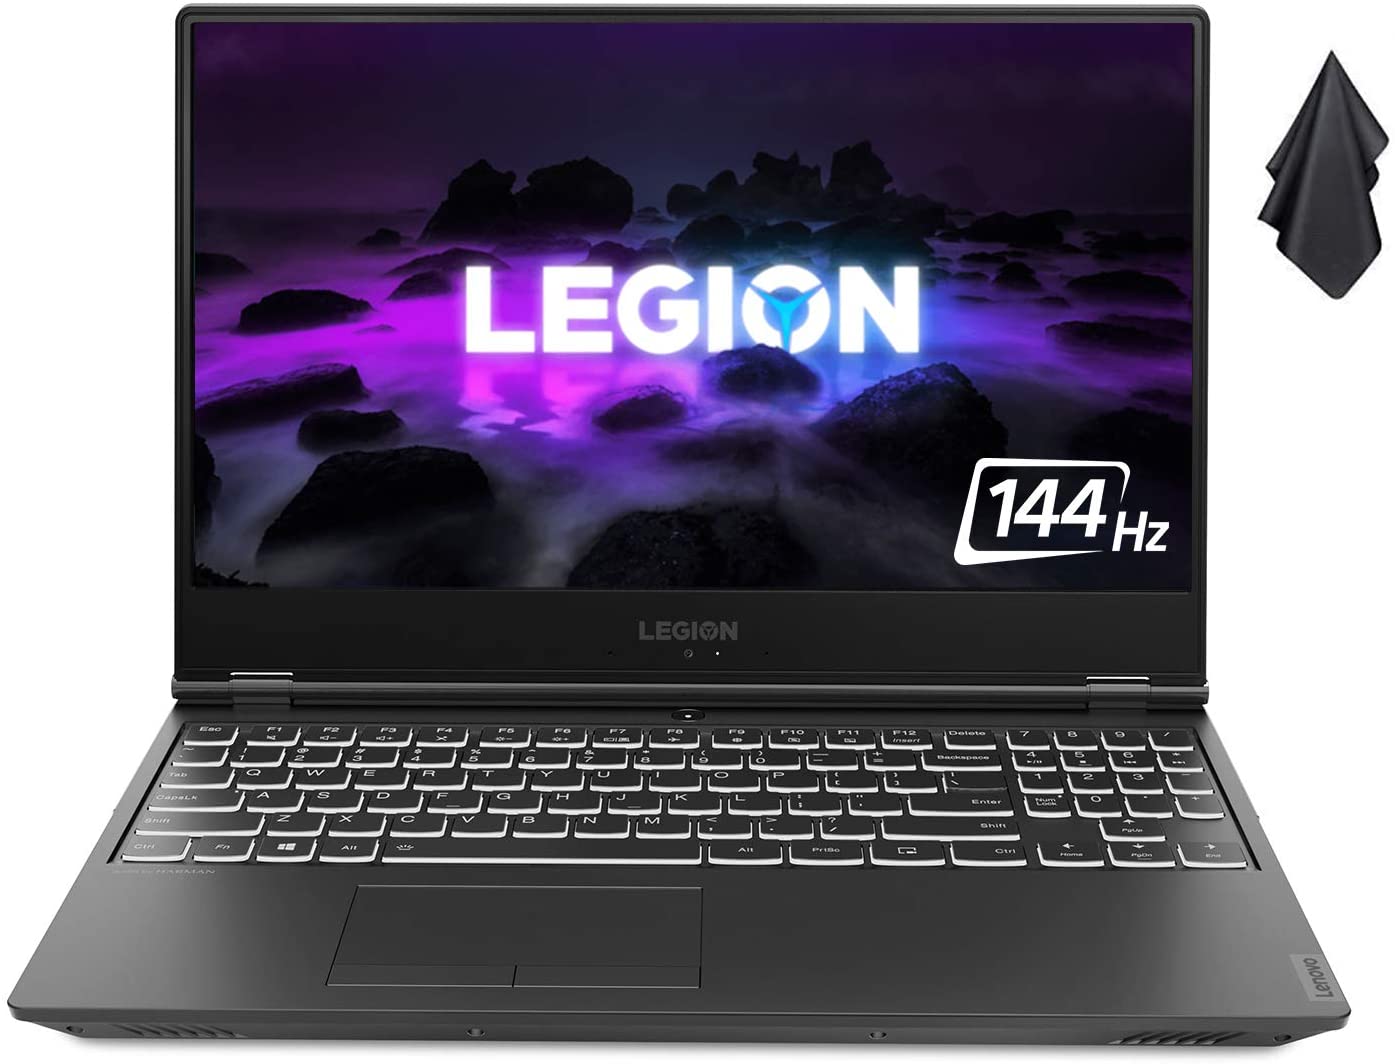 Lenovo Legion Y540 - i7-9750H · RTX 2060 · 15.6”, HD (1920 x 1080), 144 Hz, · 512GB SSD · 16GB DDR4 · Windows 10 Home · Oydisen Cloth | LaptopMedia.com